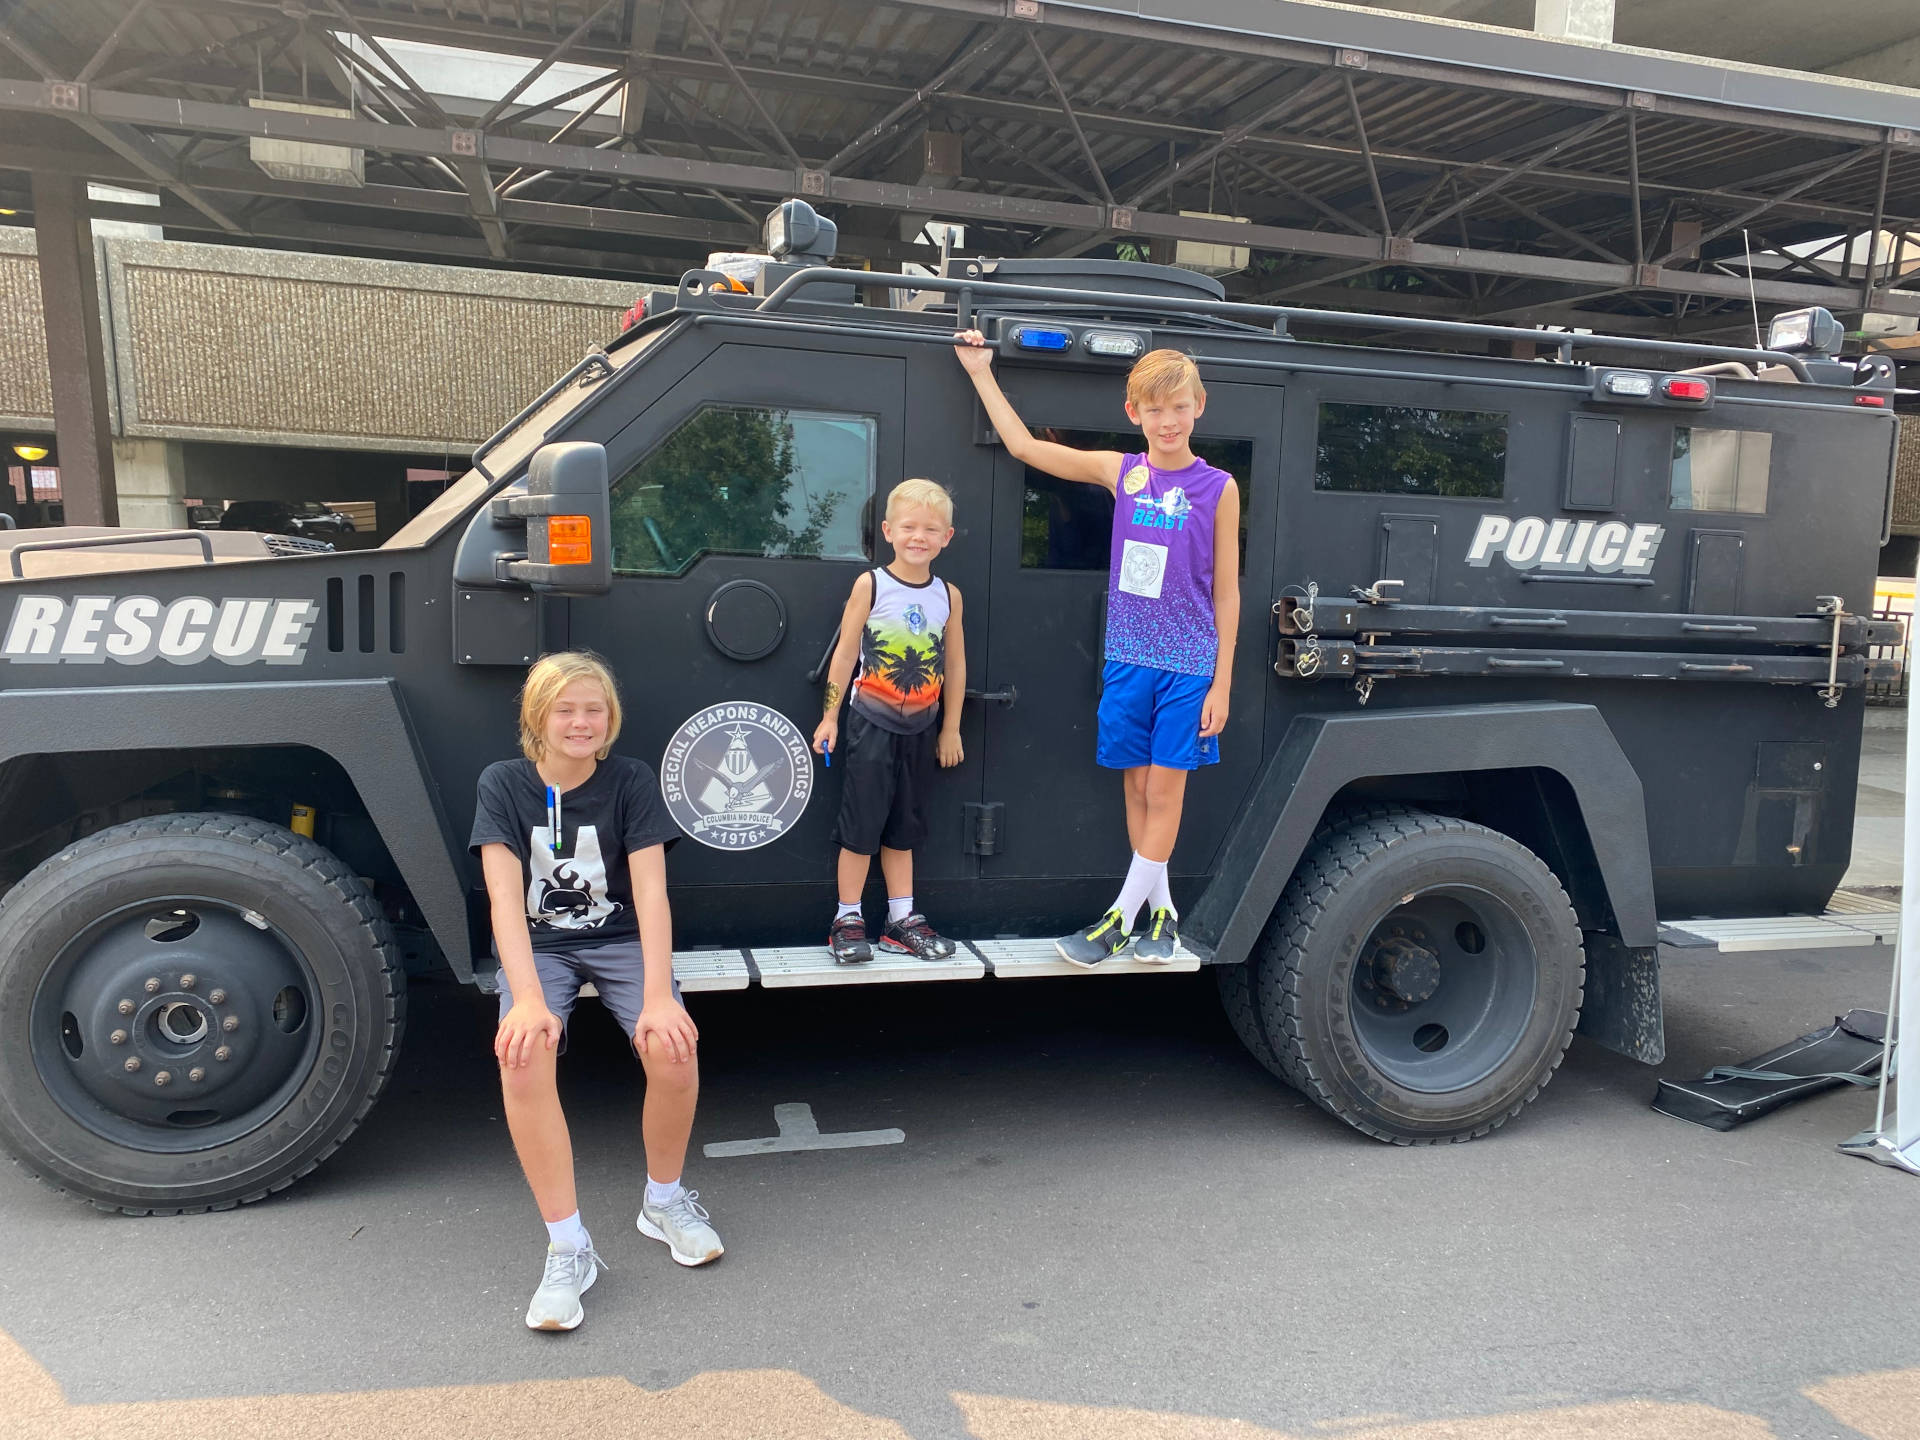 2021 Prep Fair Event Photo - Charest kids SWAT vehicle.jpg